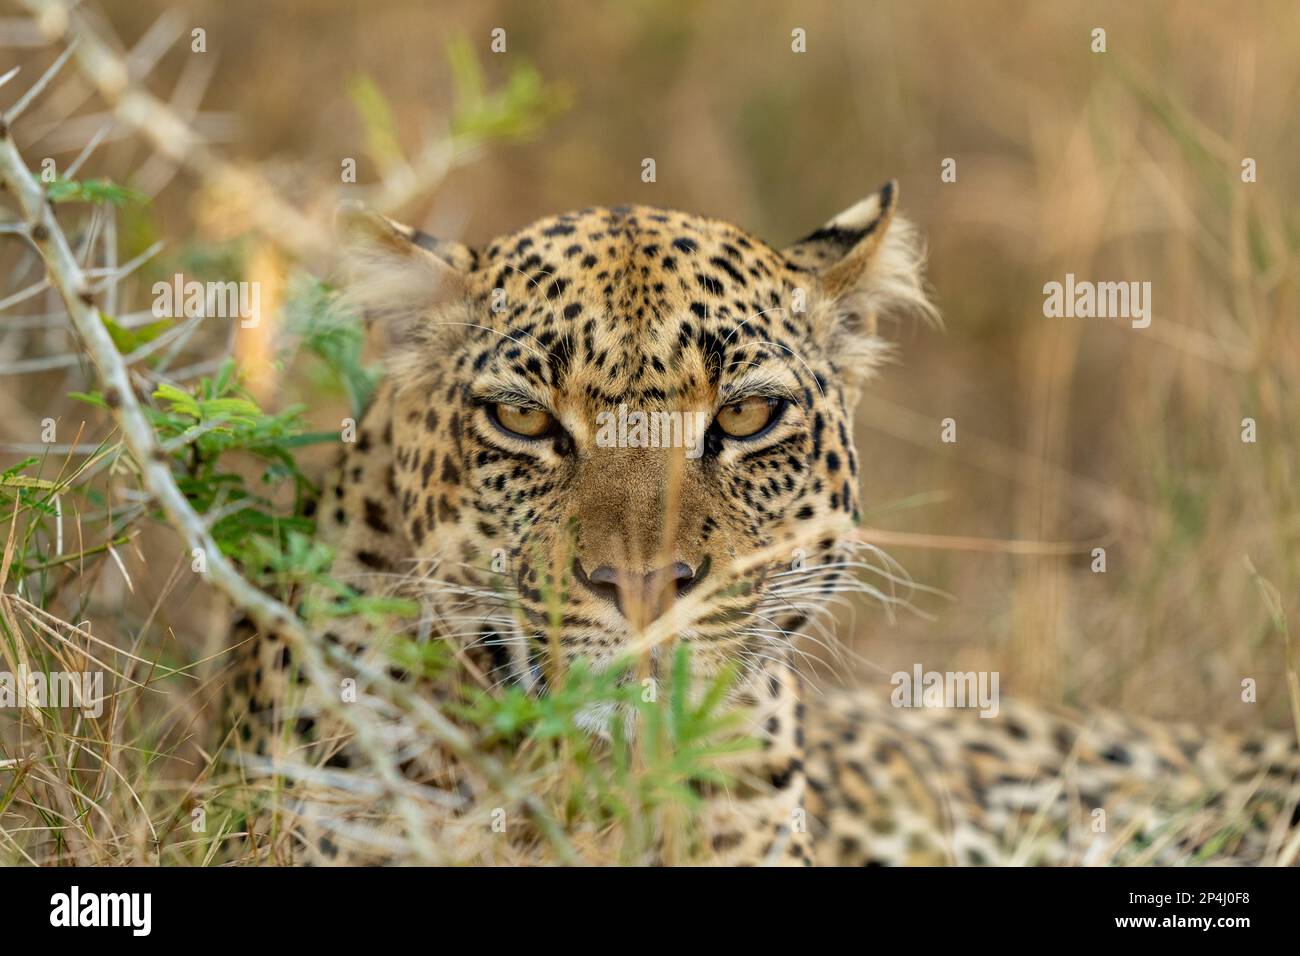 Leopard hiding behind a branch in uganda queen Elizabeth national park Stock Photo